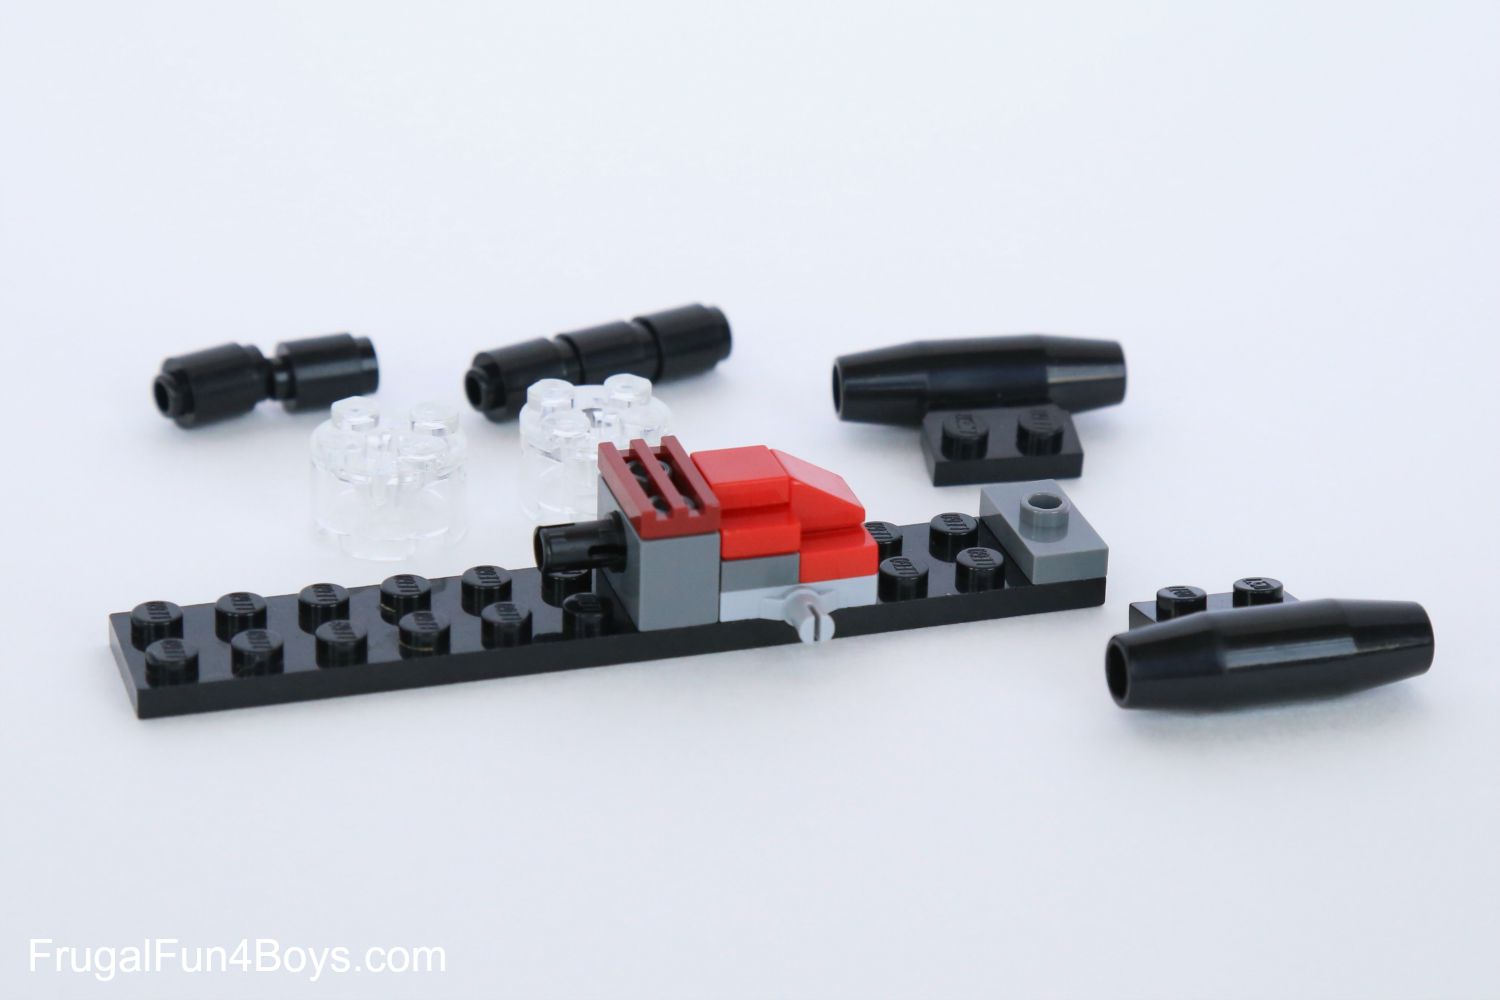 How to Build LEGO Star Wars Speeders